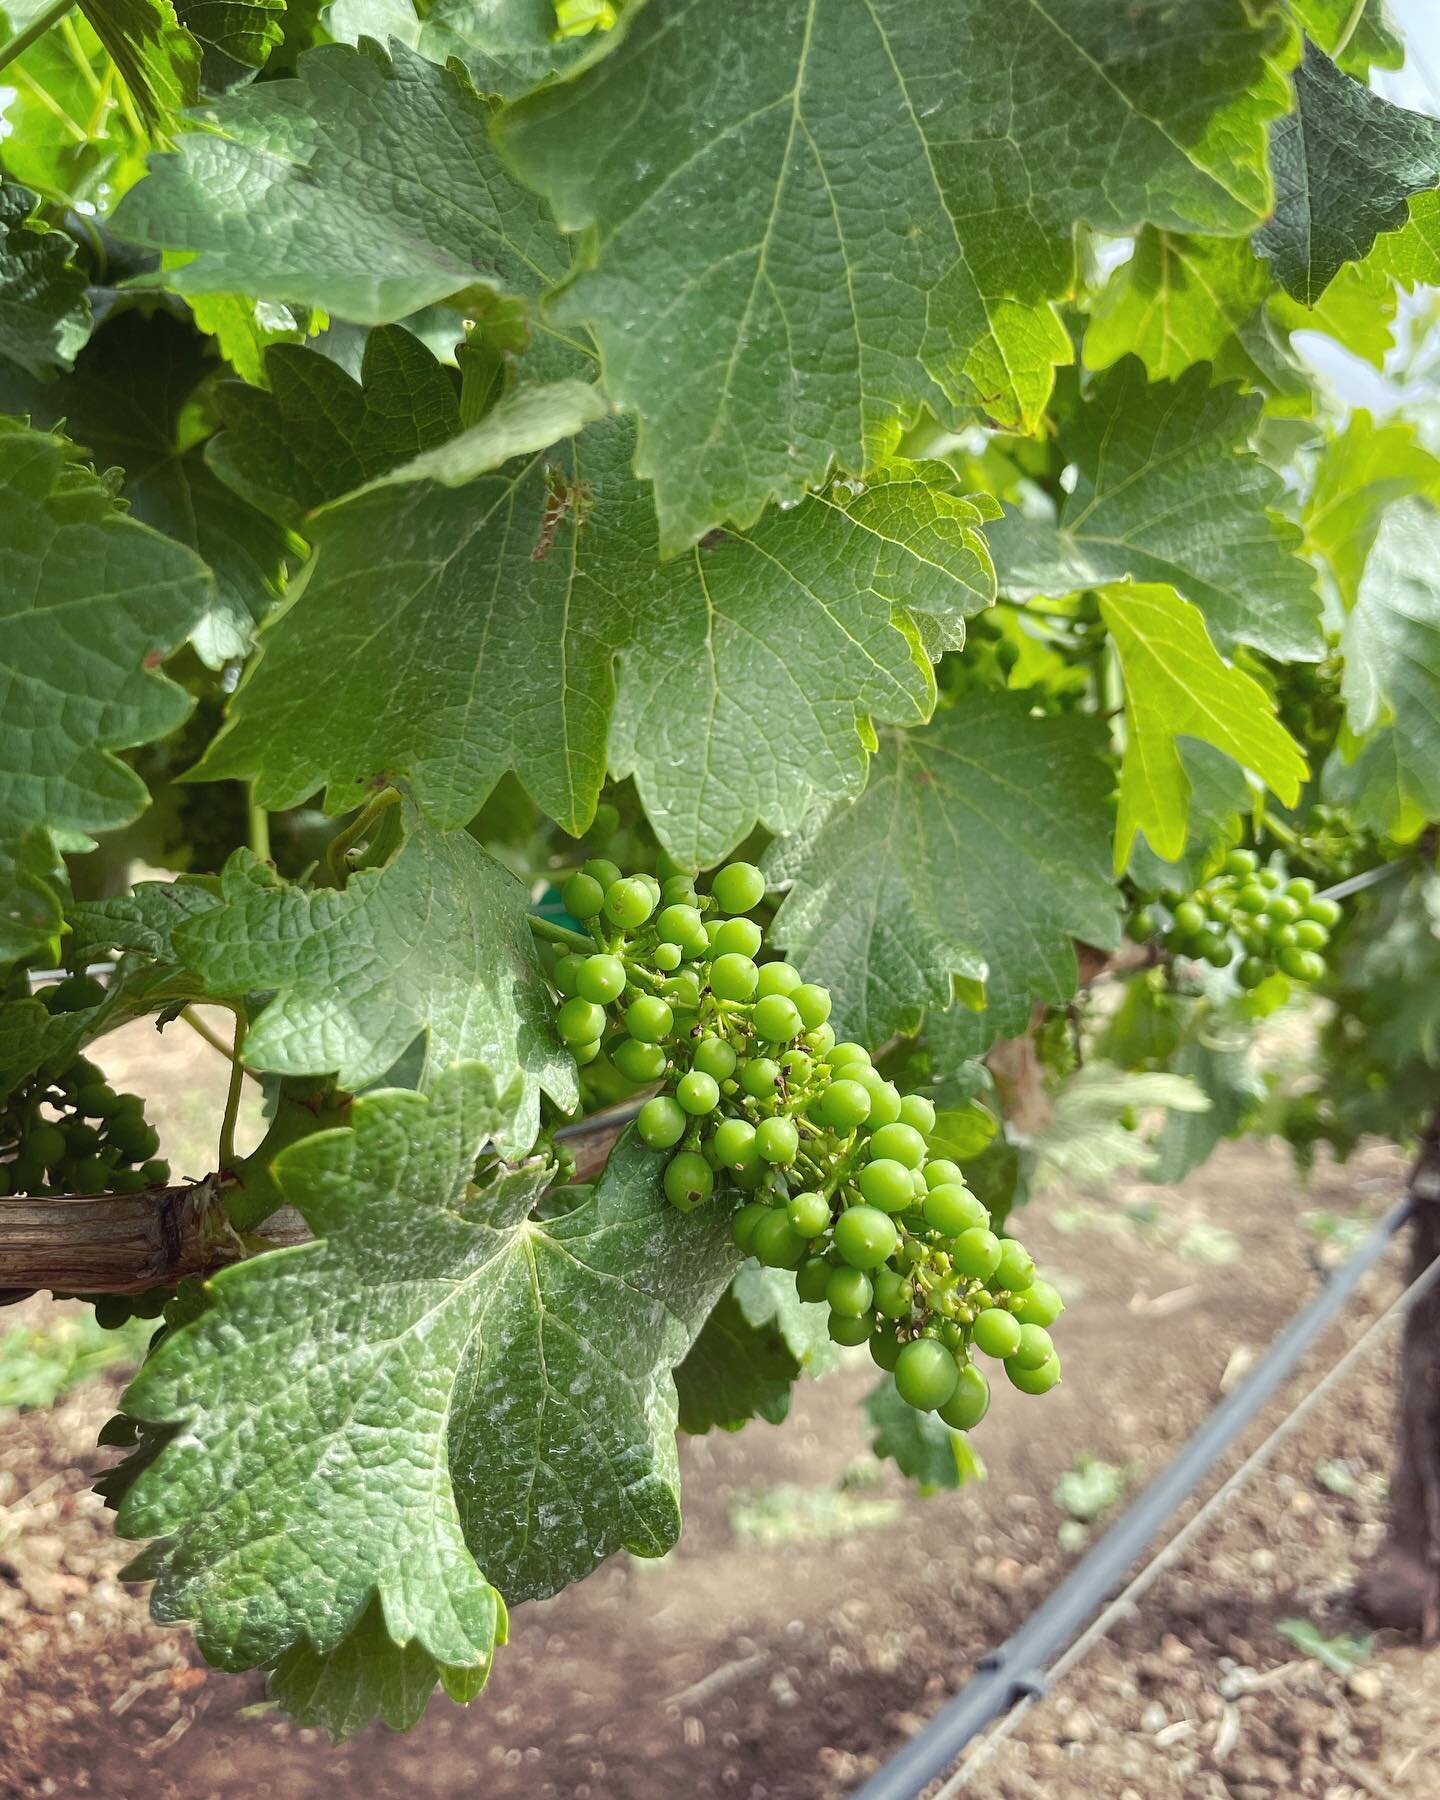 The Sauvignon Blanc is developing beautifully!
.
.
.
#sauvignonblanc #drycreekvalleywine #drycreekvalley #winegrapes #vineyard #sonomacounty